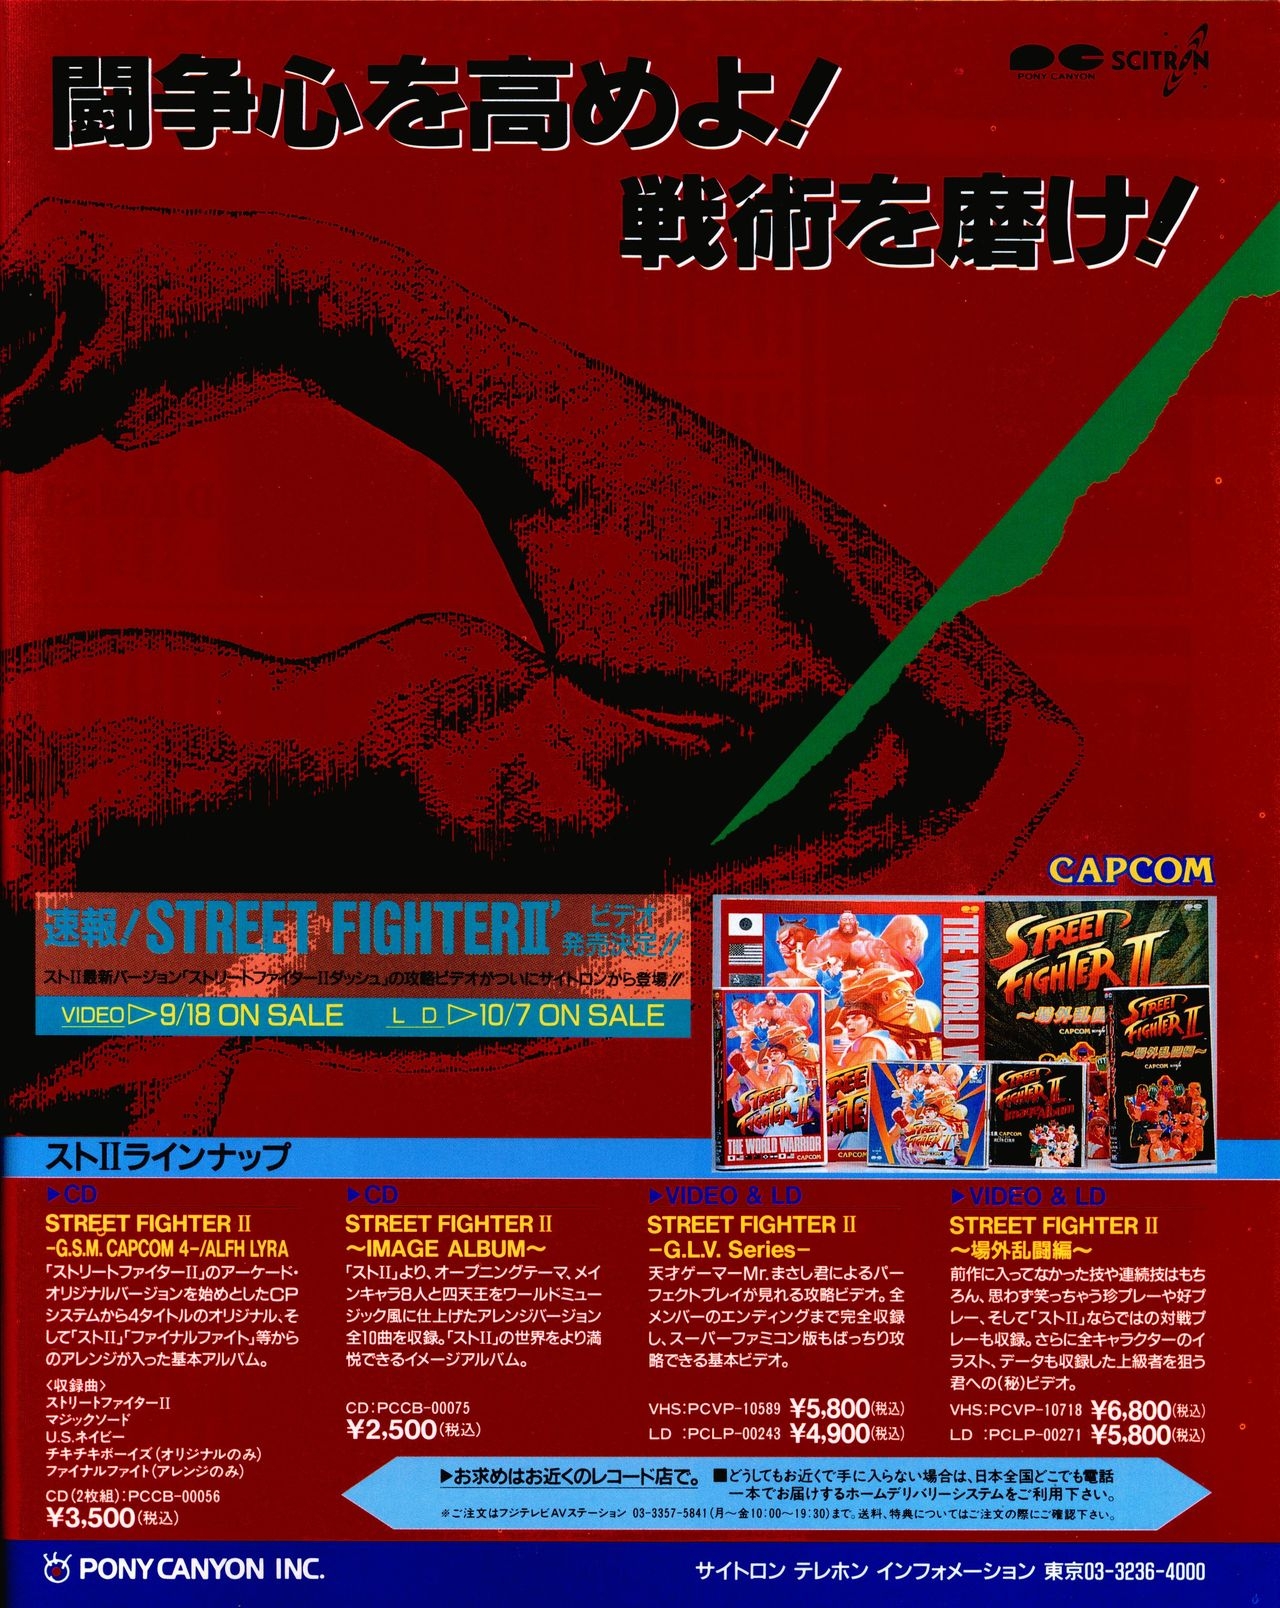 Street Fighter II Dash - Gamest special issue 77 47